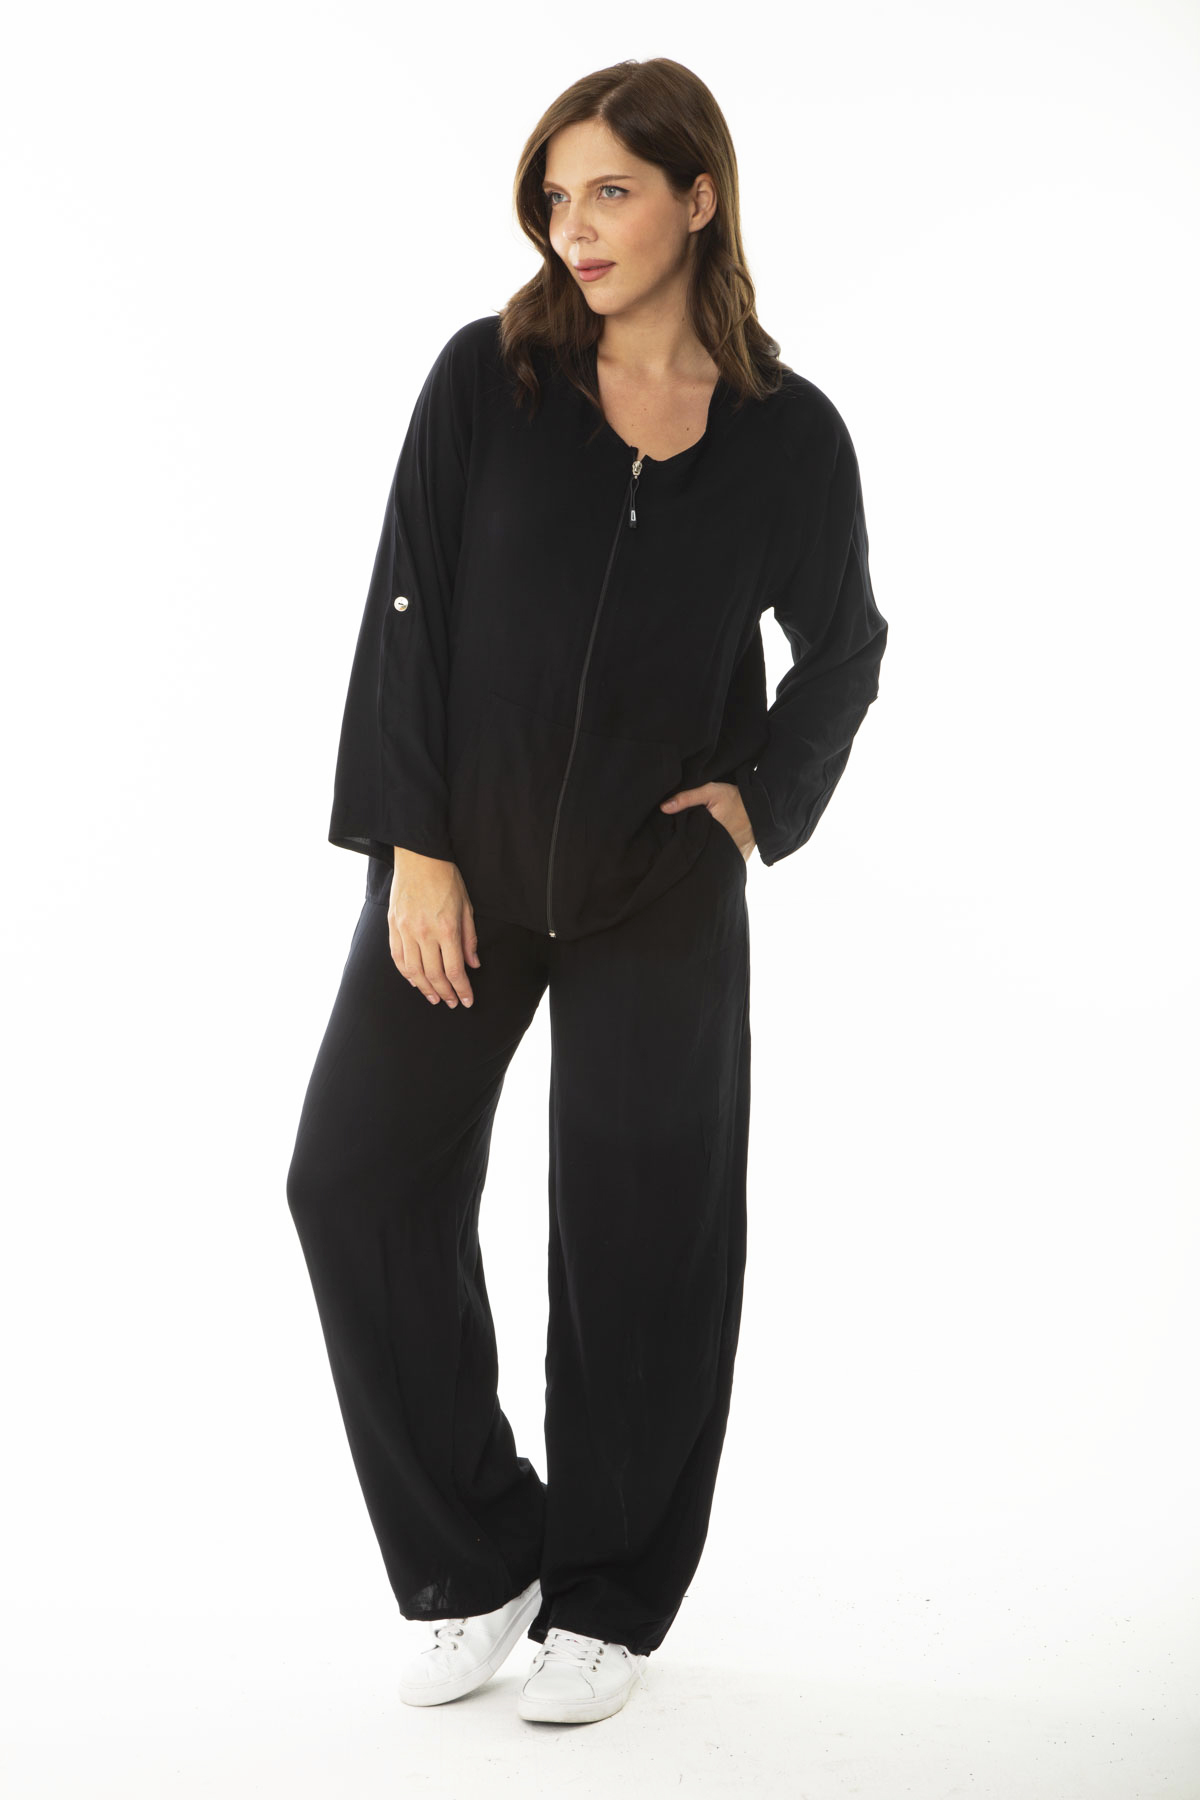 Şans Women's Plus Size Black Front Zippered Cardigan with Adjustable Sleeves Pants Double Suit